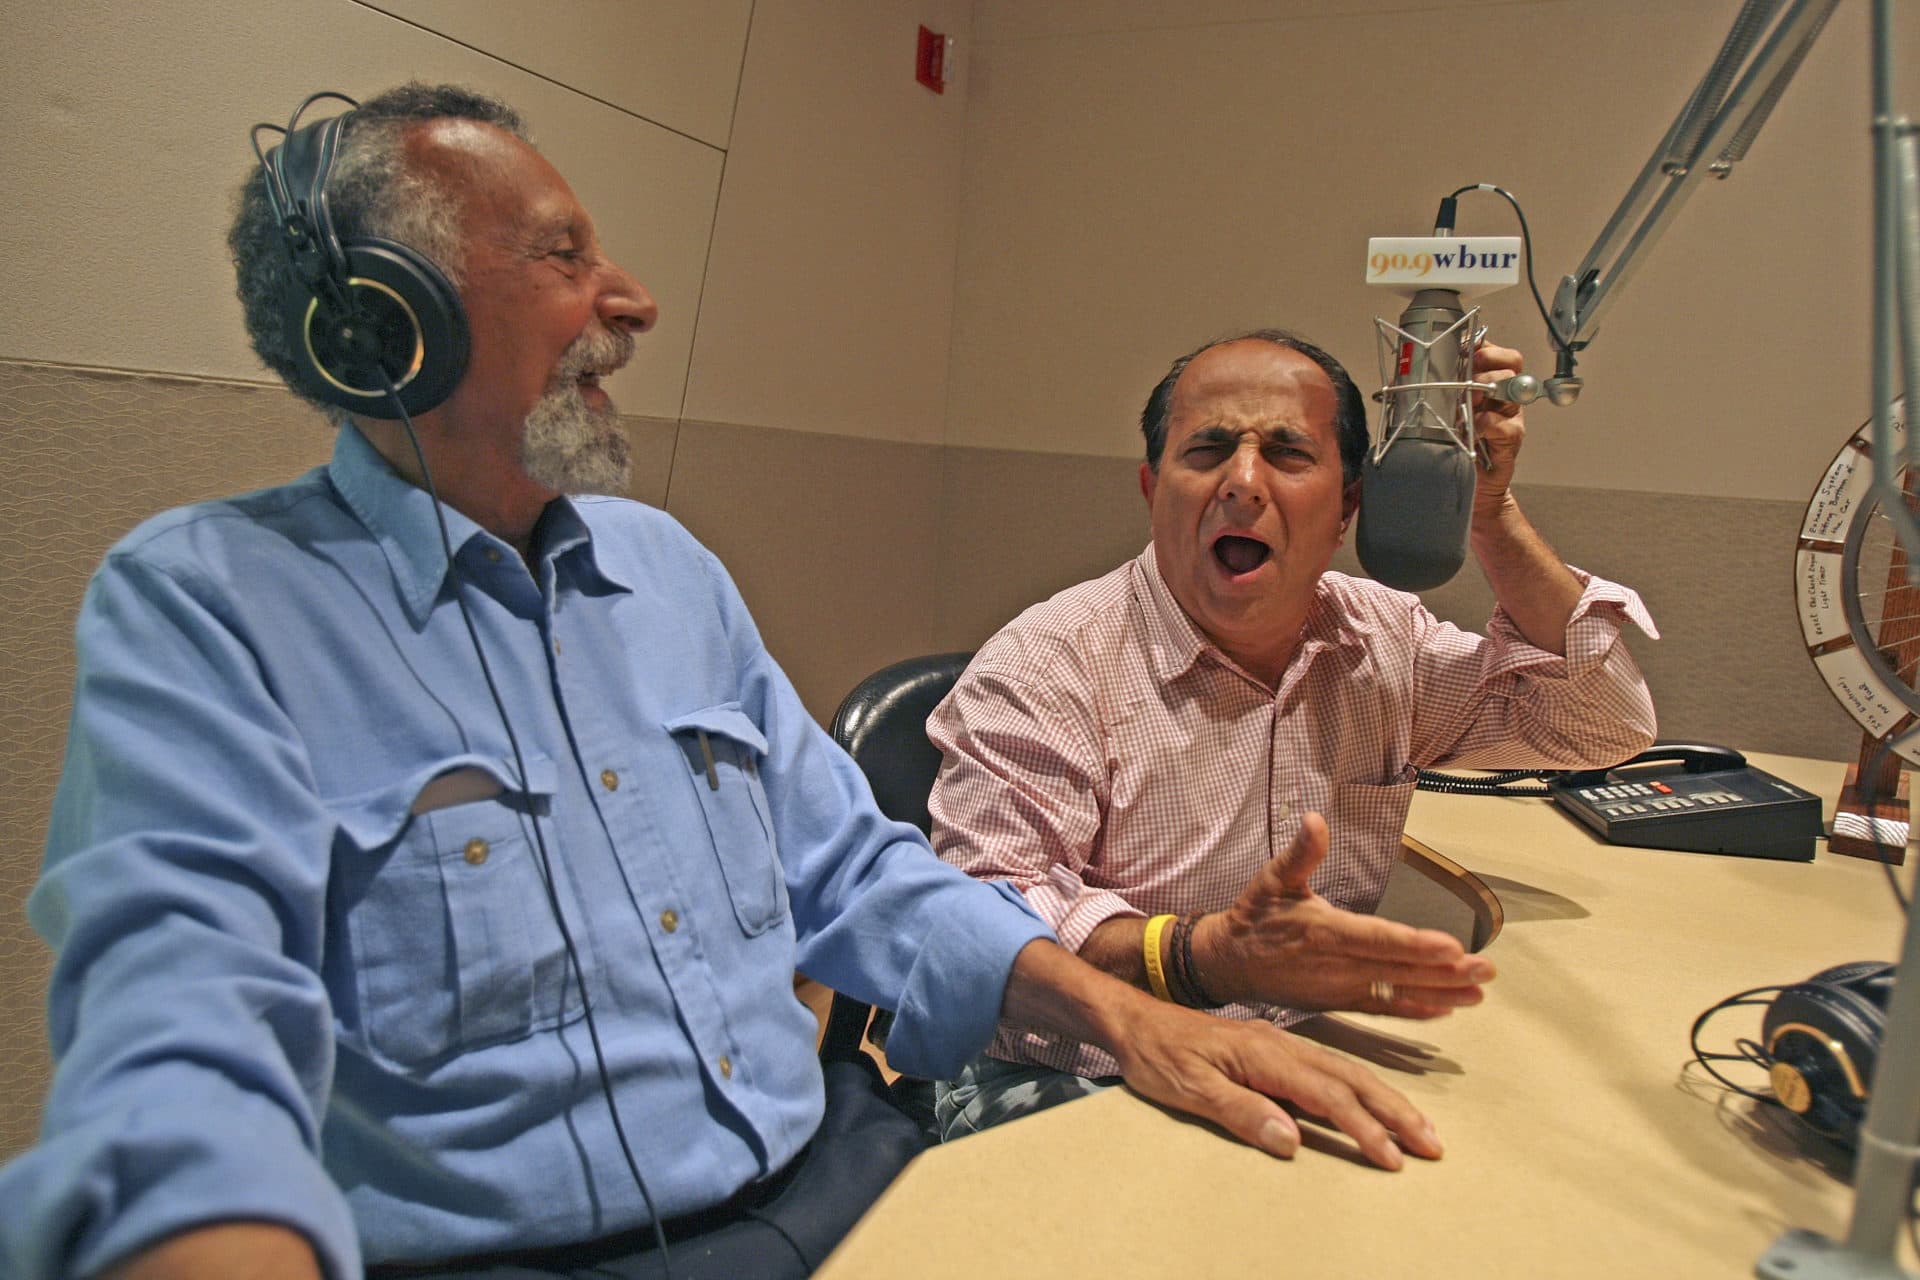 Tom and Ray Magliozzi inside WBUR's studios. (Suzanne Kreiter/The Boston Globe via Getty Images)